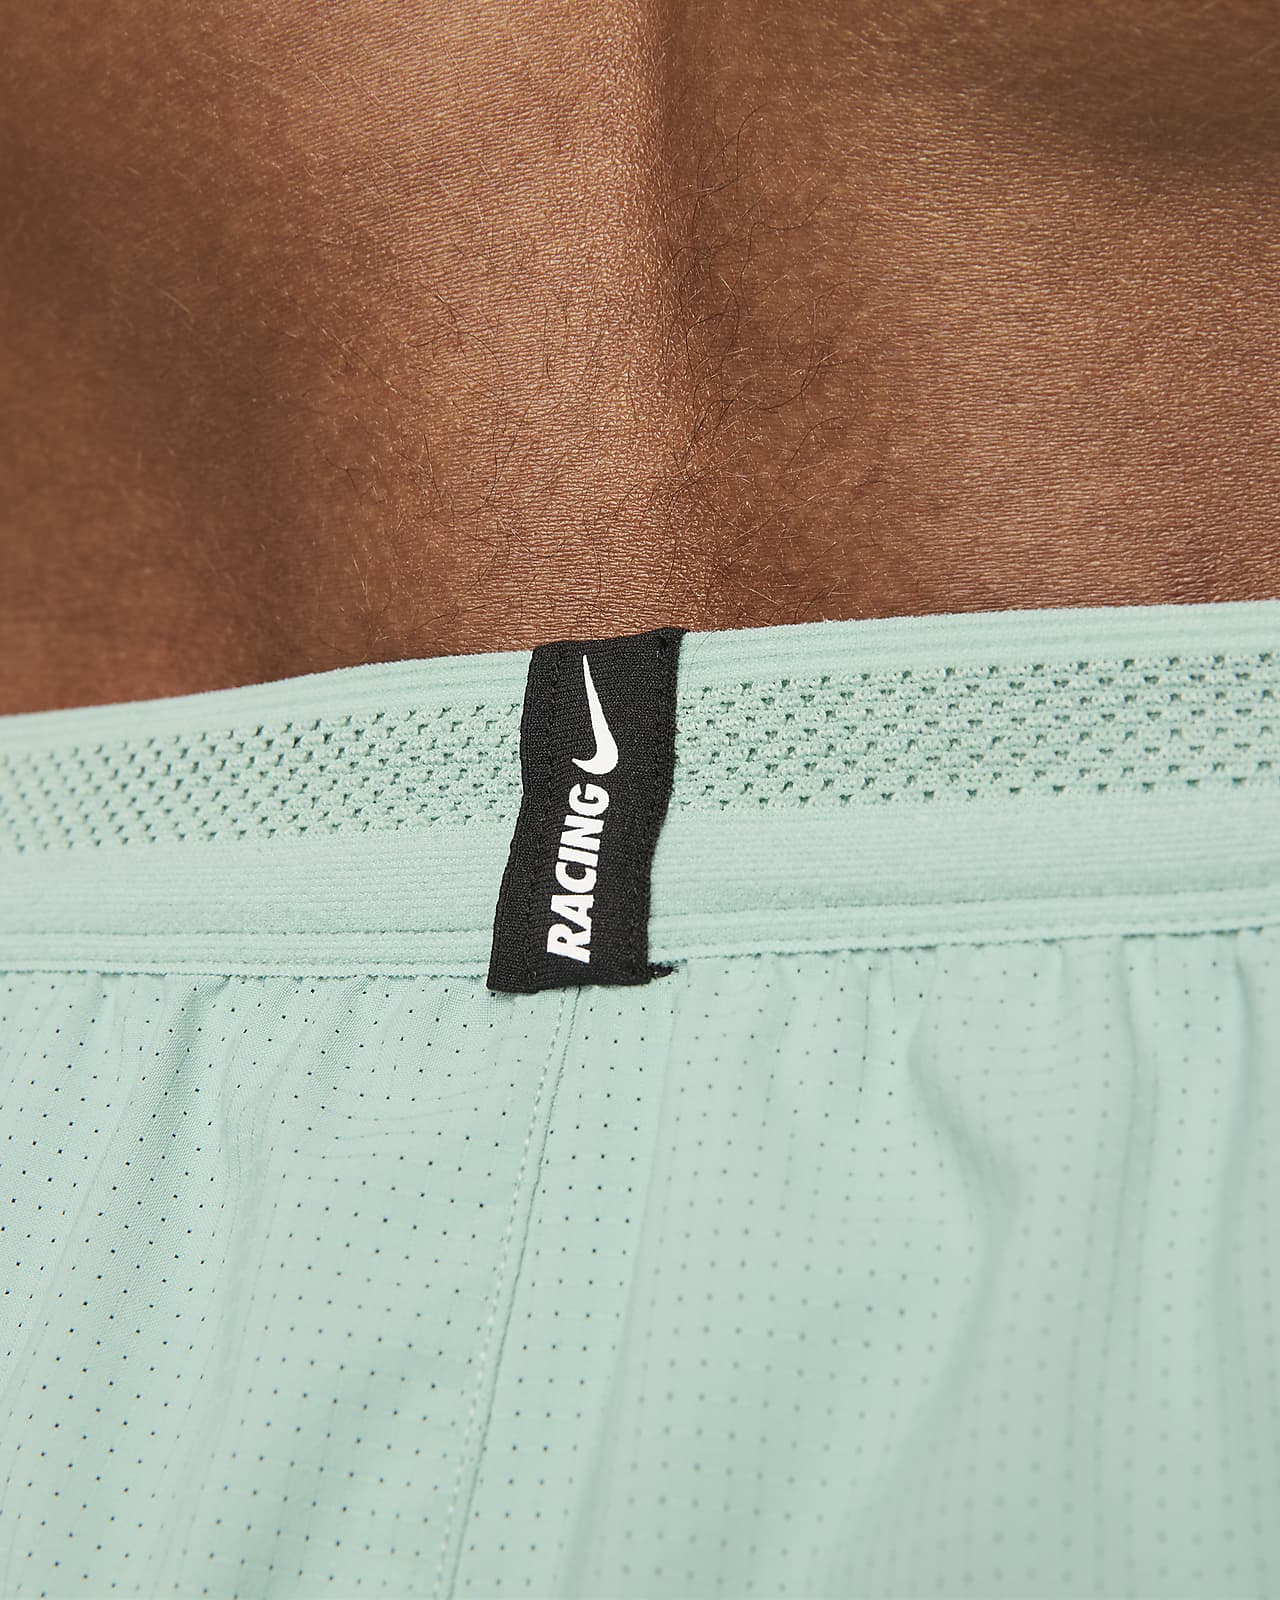 Nike AeroSwift men's 4 Running Shorts - size XL - Industrial Blue